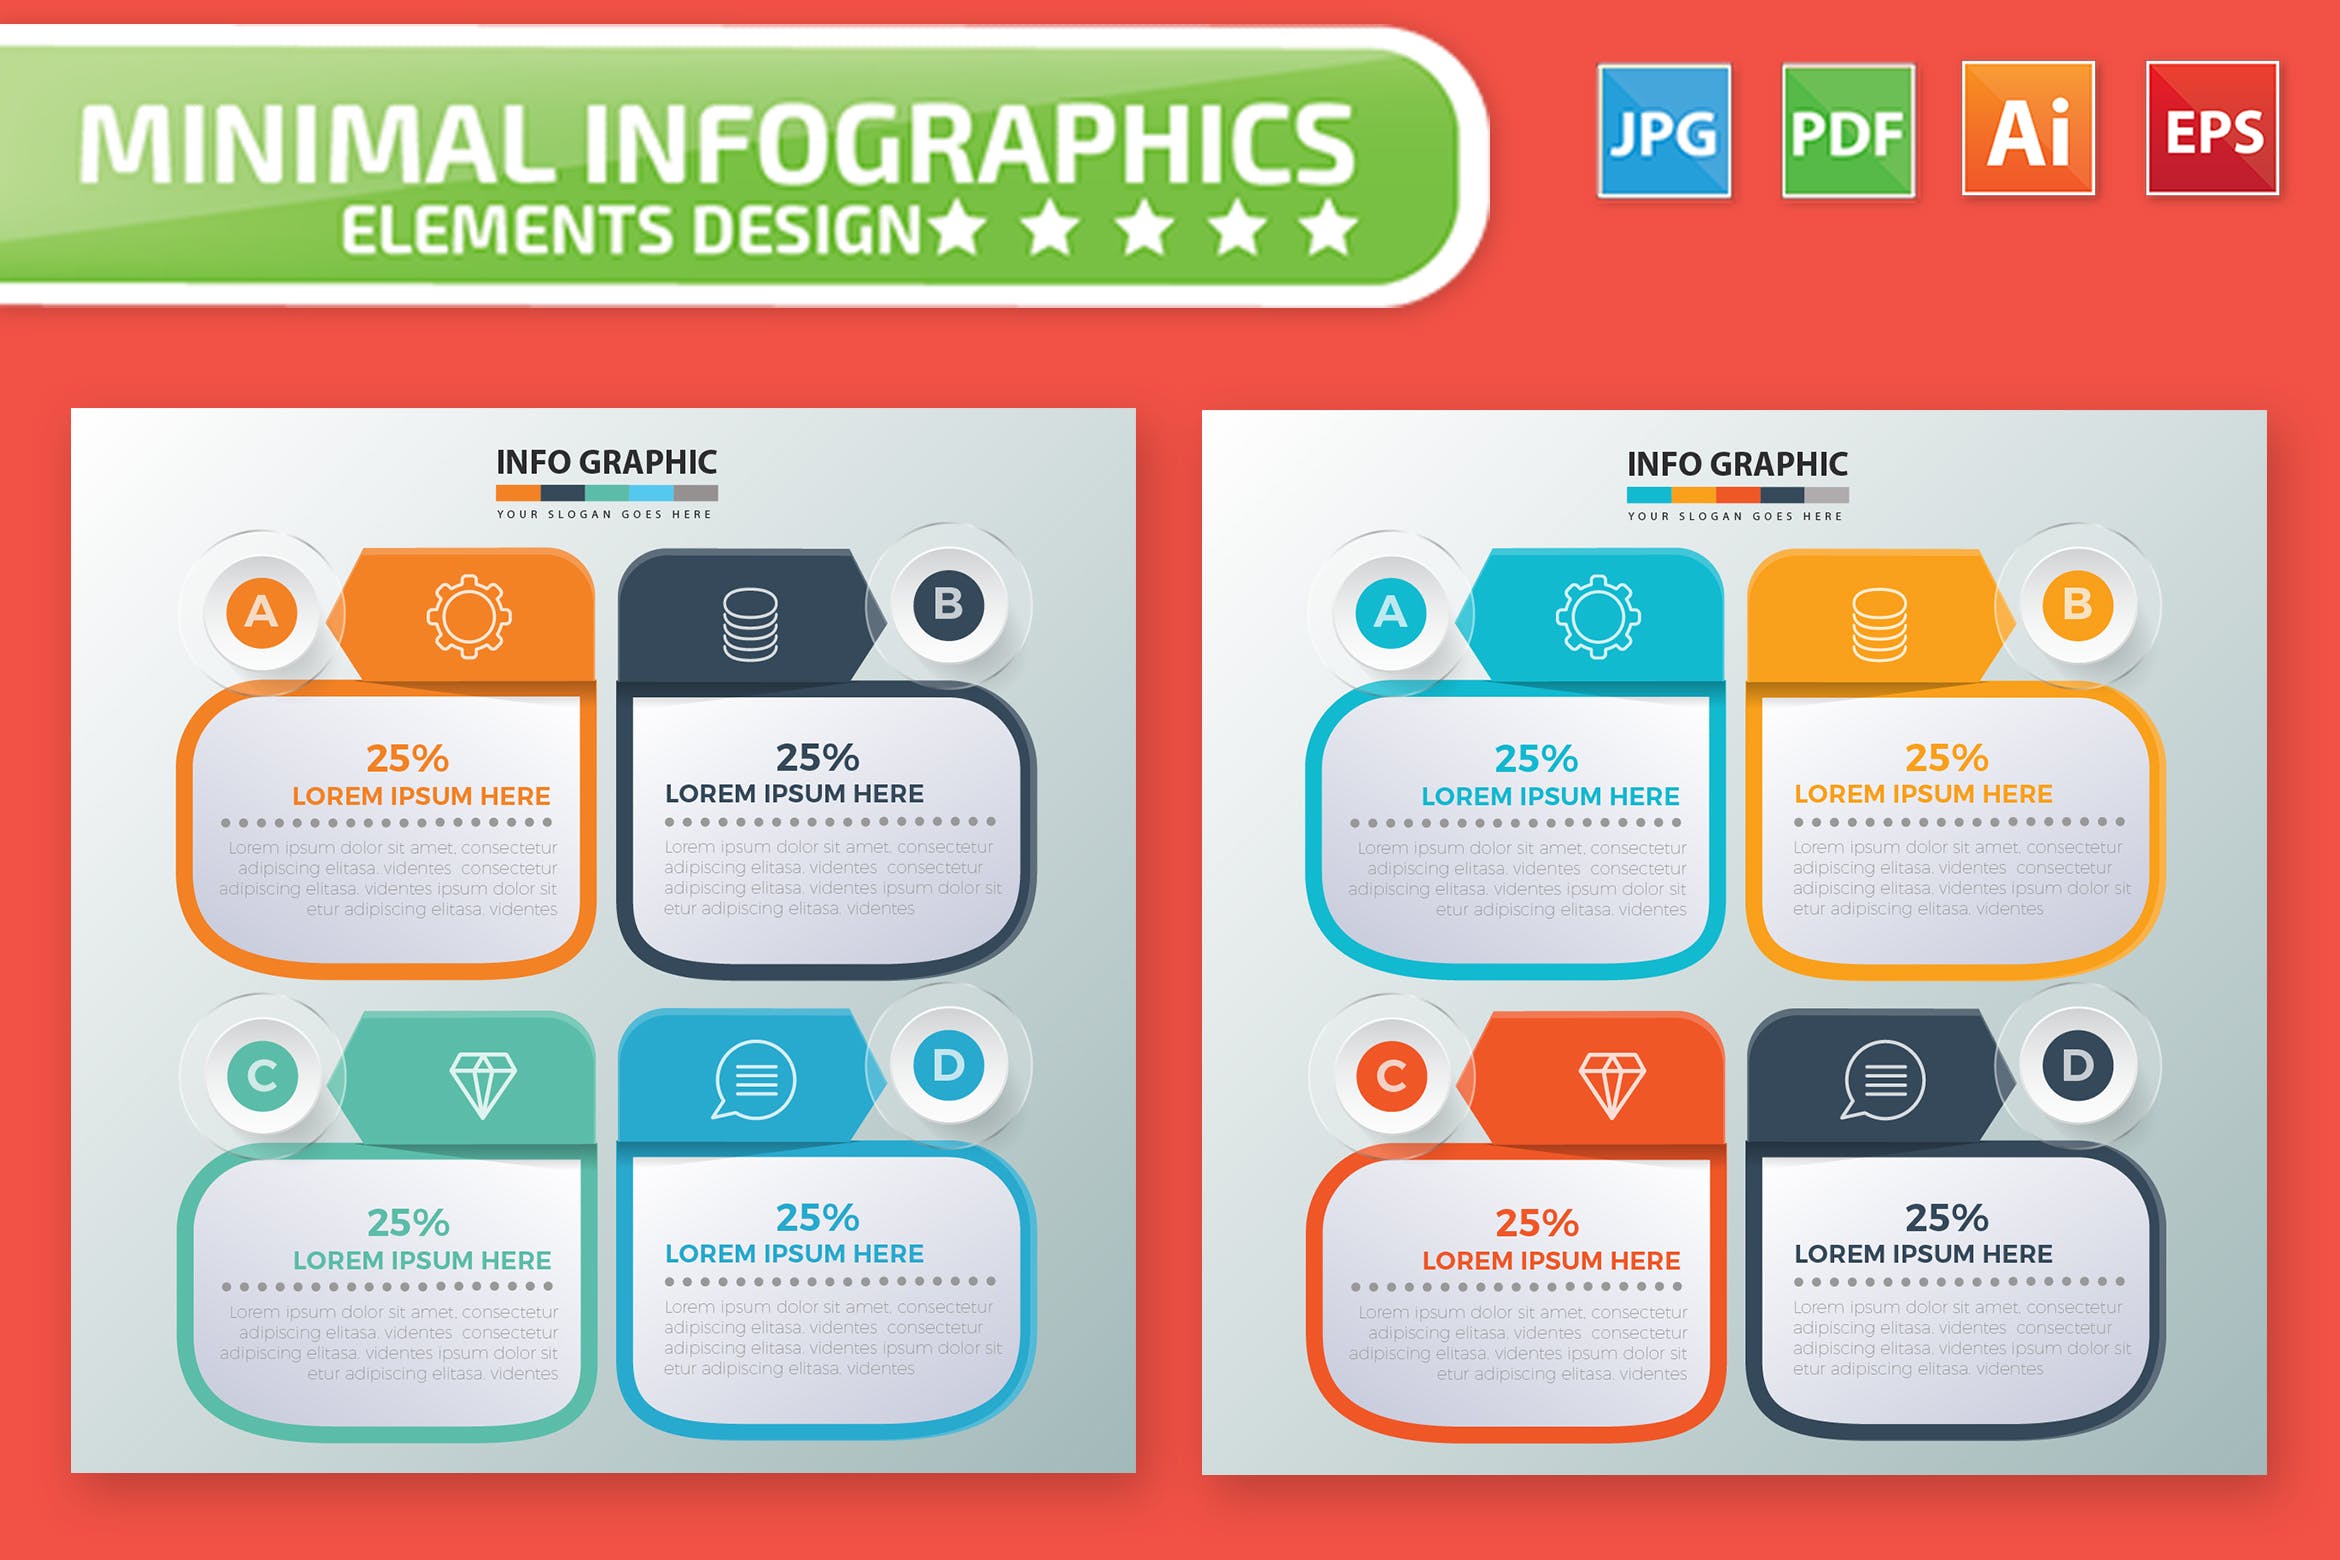 多目标决策PPT信息图表设计素材 Infographic Elements插图